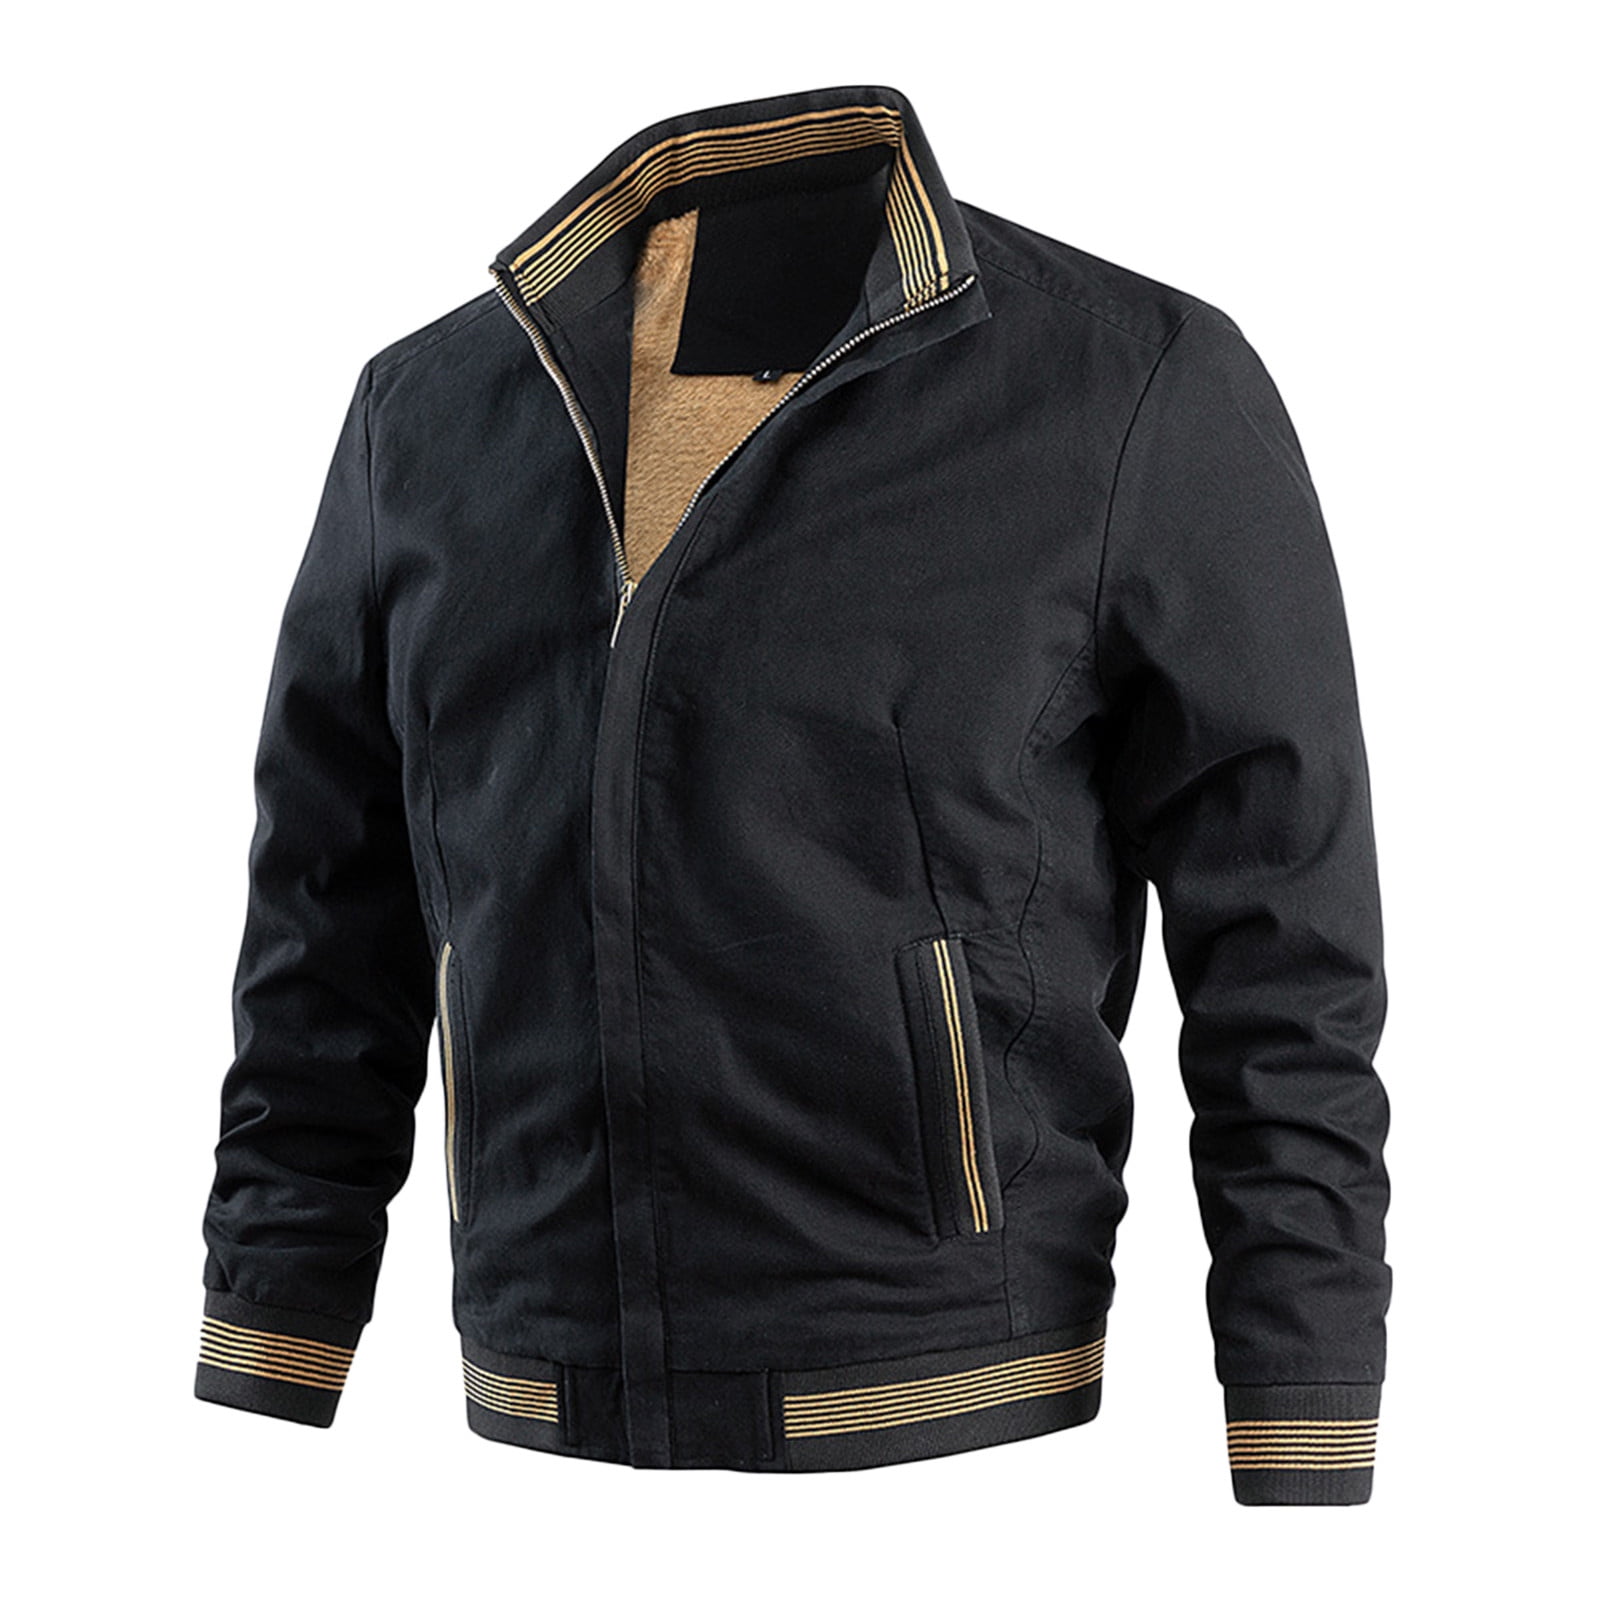 GWAABD Business Casual Jacket Men's Sports Leisure Top Plus Velvet Zip  Pocket Stand-Up Collar Jacket Blouse 